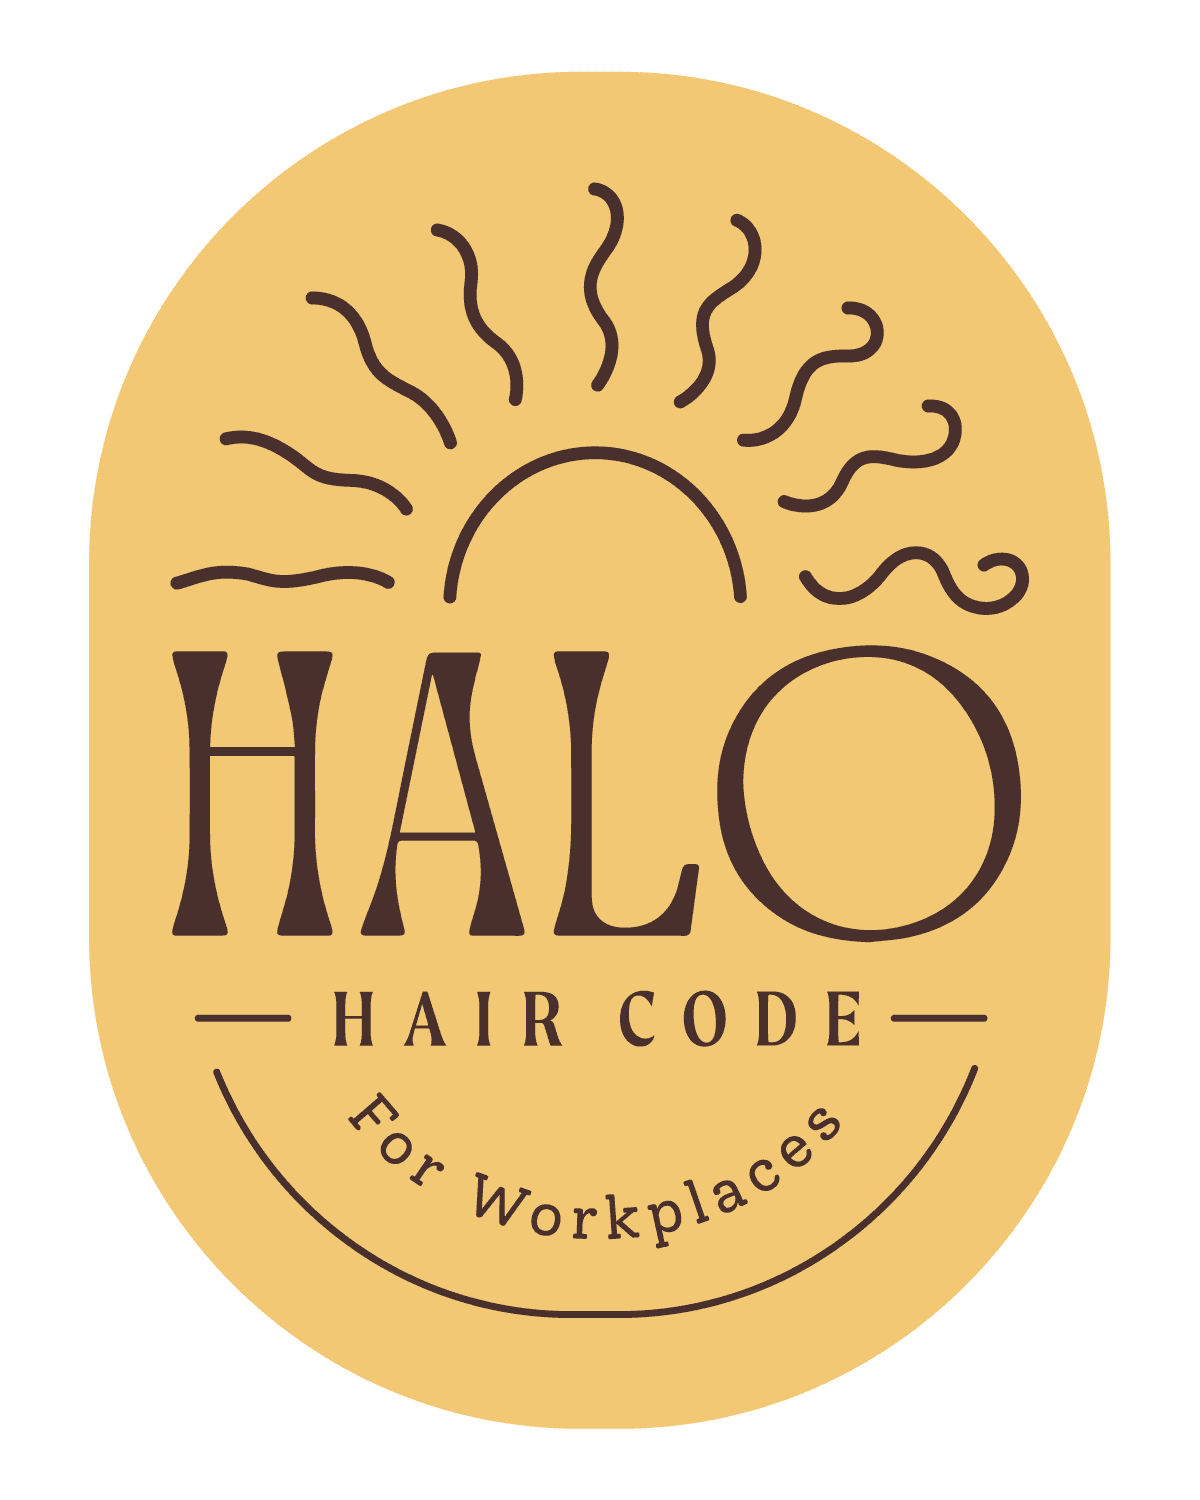 The Halo Code